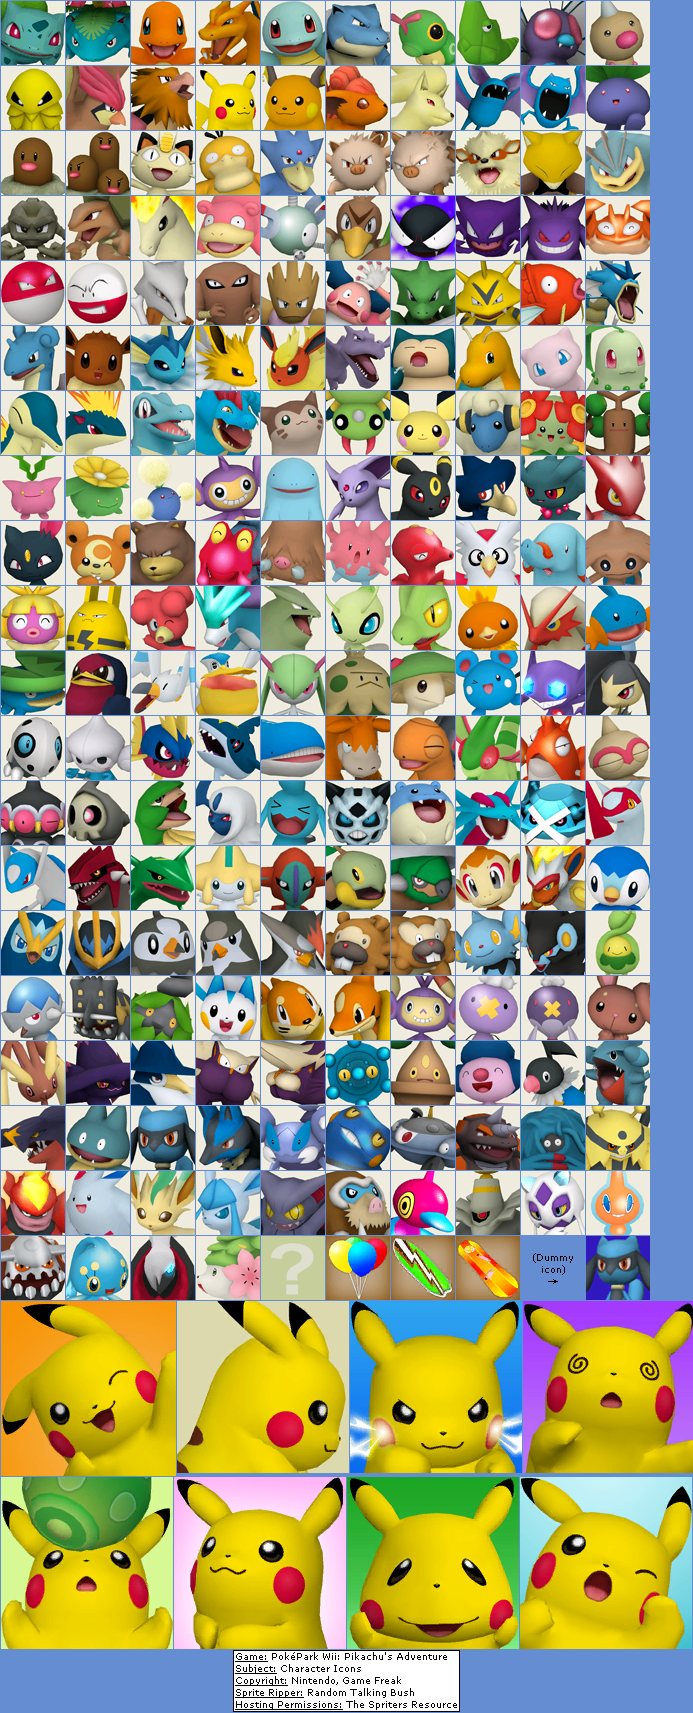 PokéPark Wii: Pikachu's Adventure - Character Icons